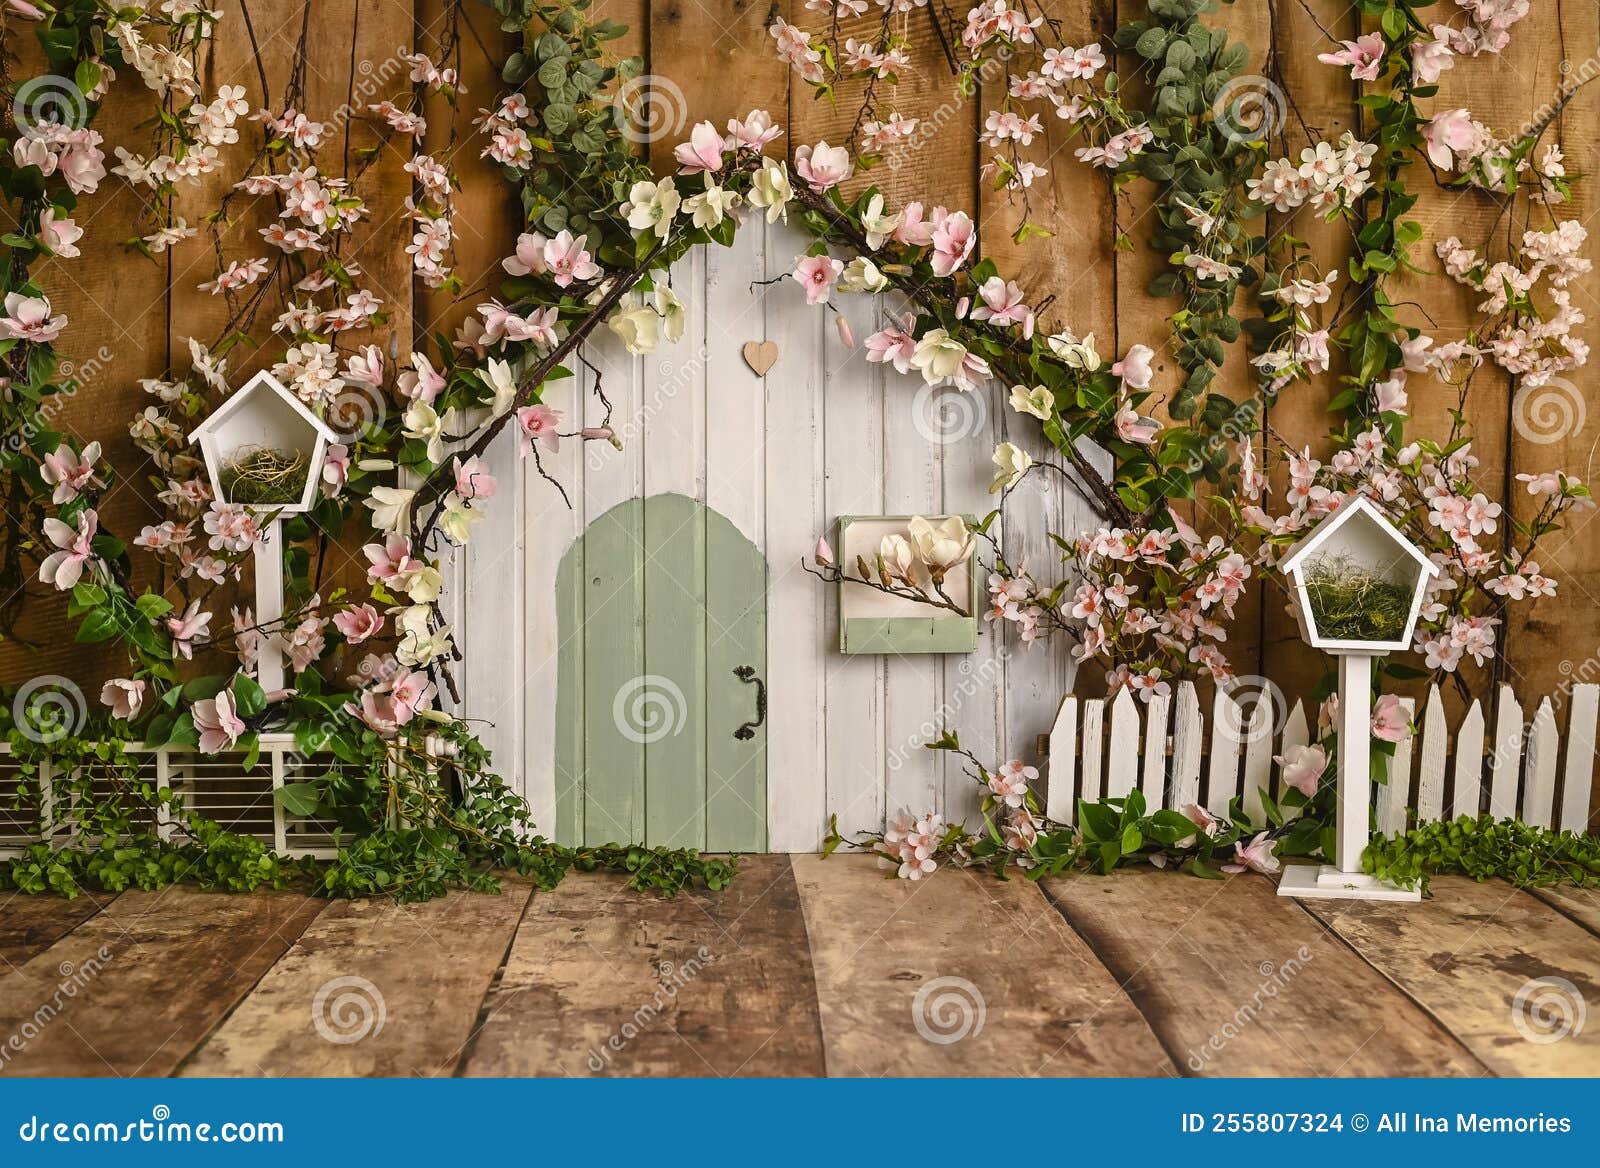 rustic cute house and pinky flowers custom made sett up